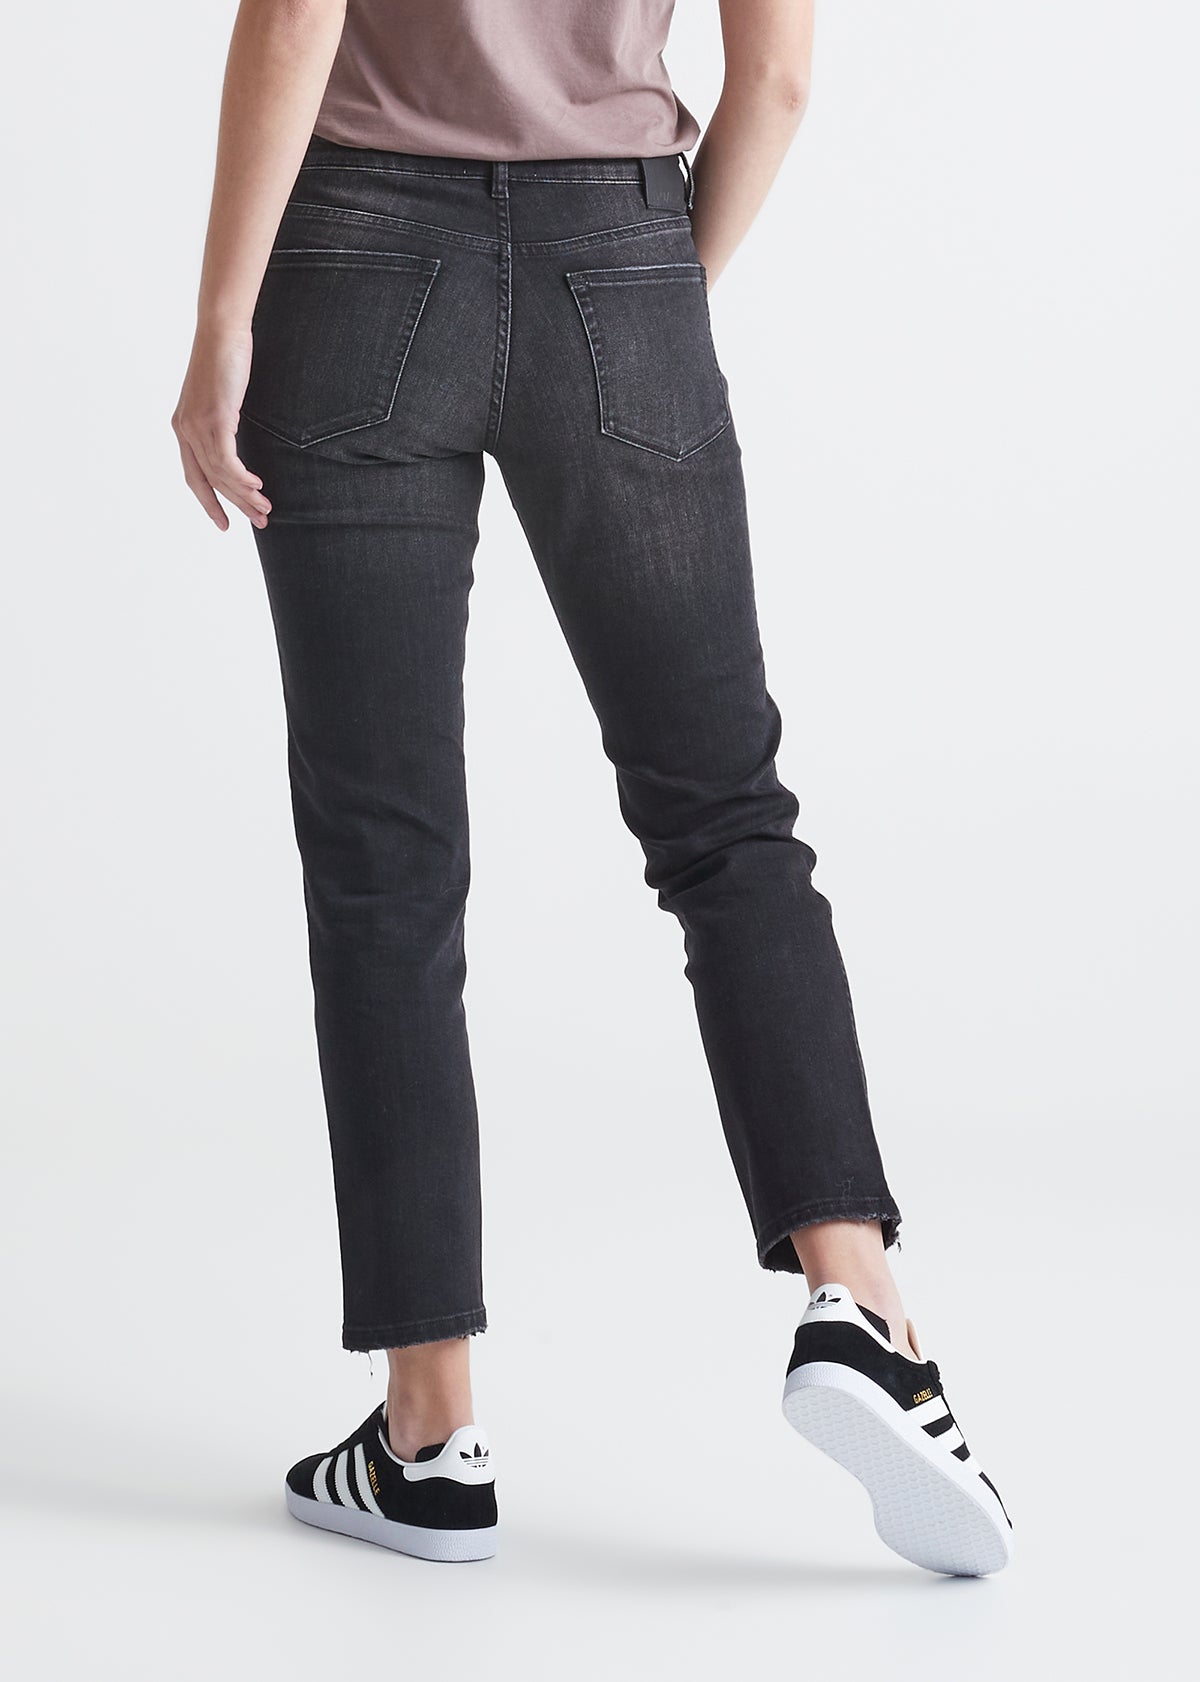 Capri Pants Size 4 - Fit 4 stretch womens  Womens jean pants, Women jeans,  Womens capri pants